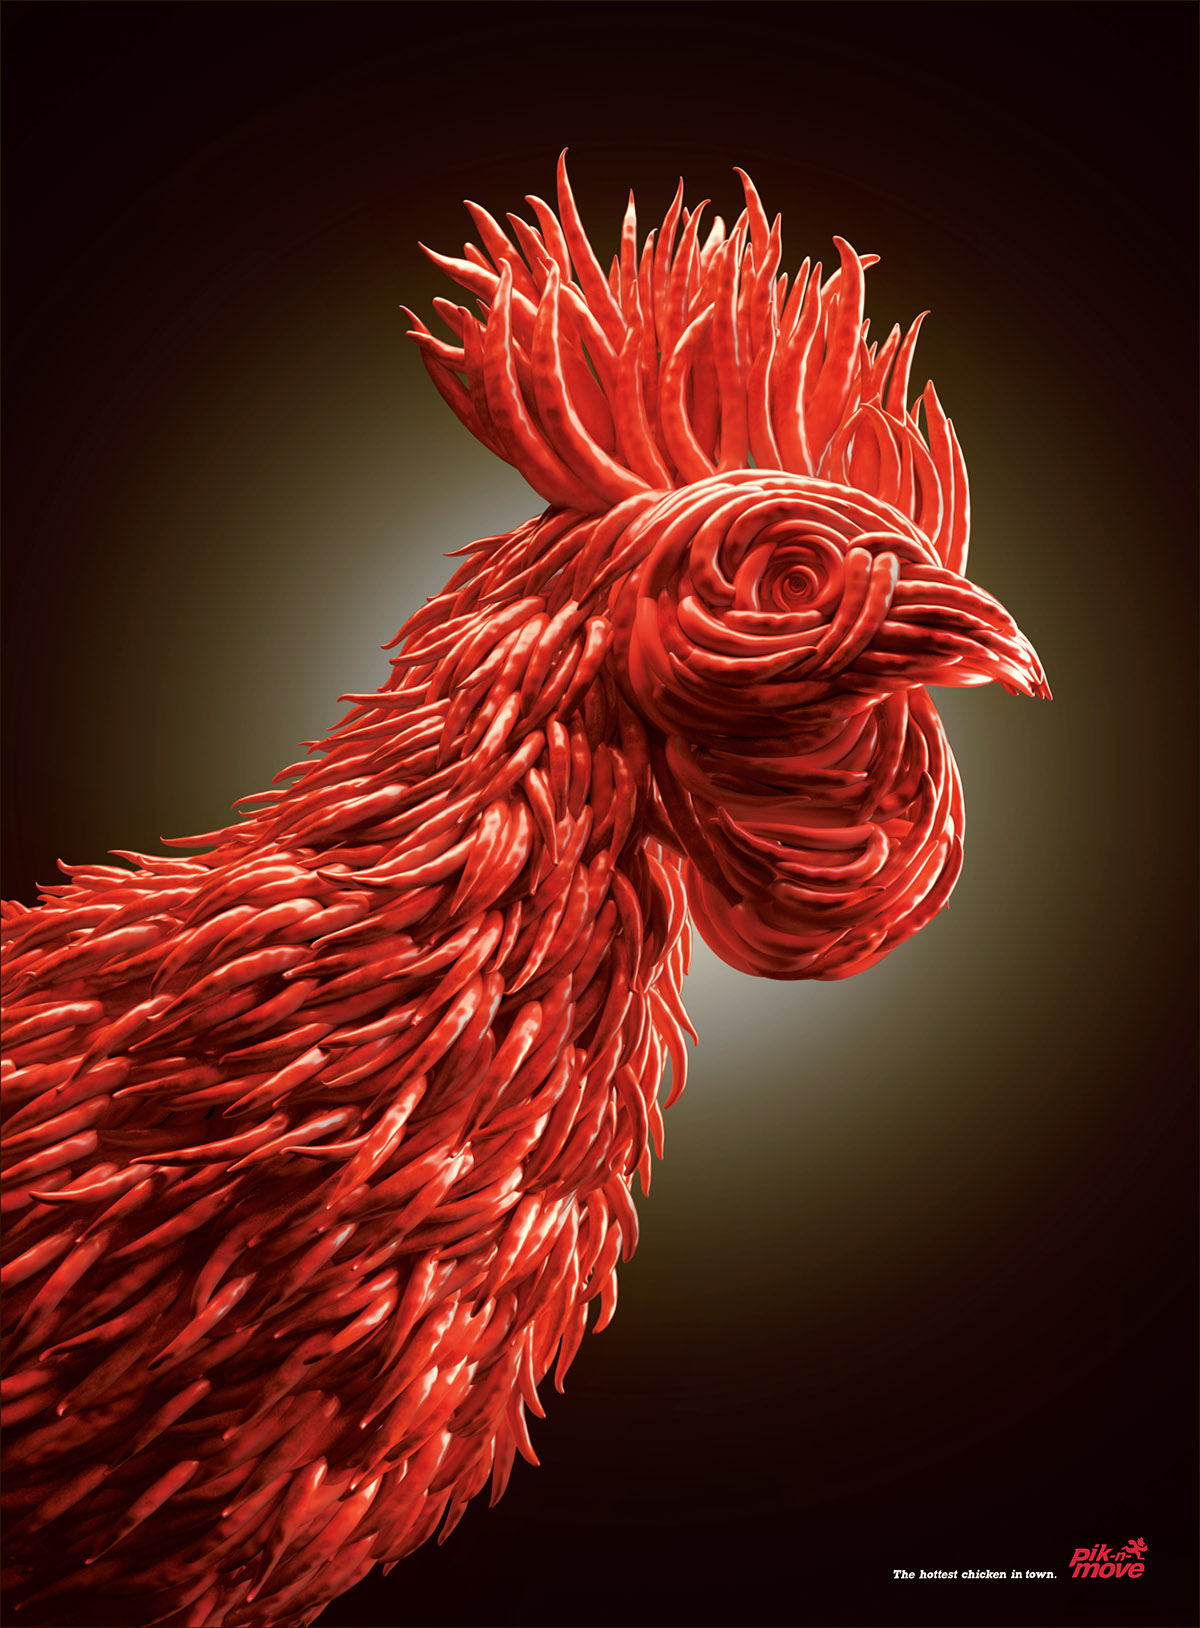 KFC Anshul dabral Delhi 3D myoo hottest chicken India digital CGI 3dsmax vray Chilli